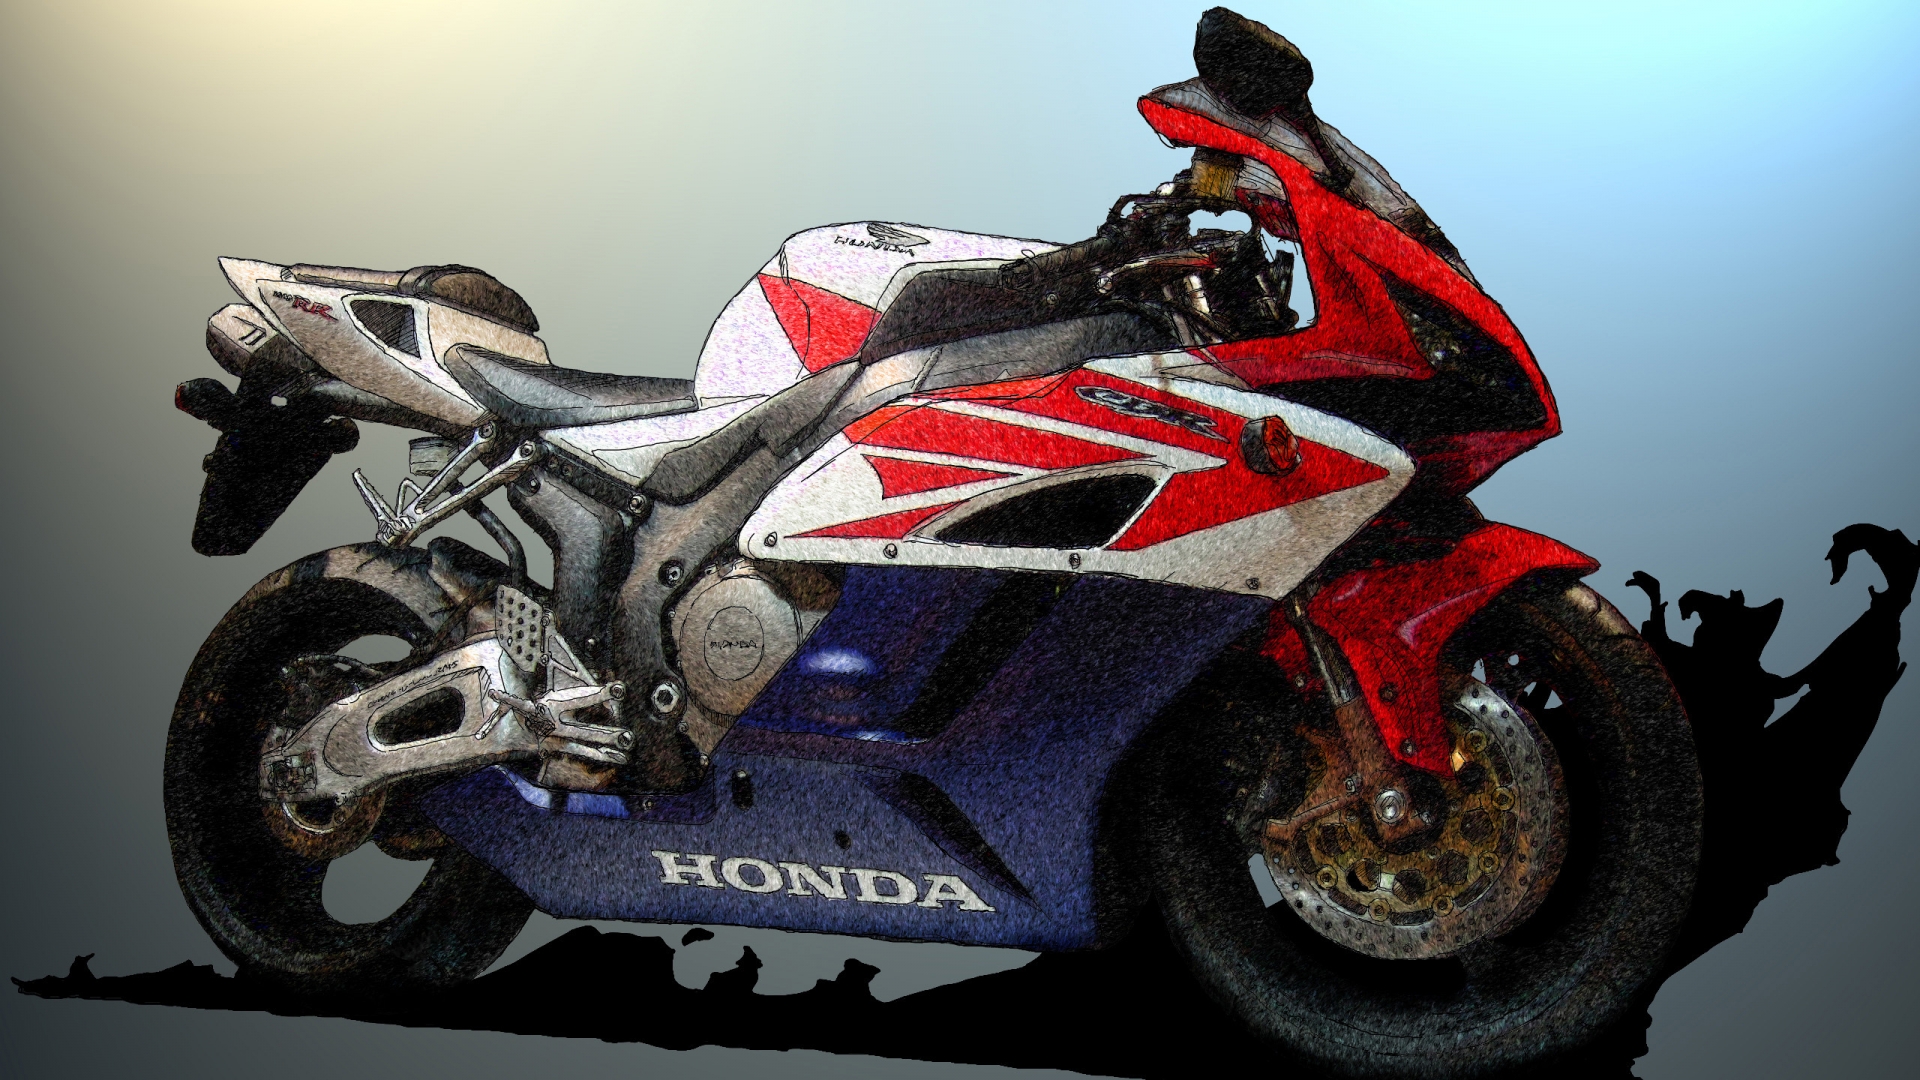 Honda CBR Sketch for 1920 x 1080 HDTV 1080p resolution